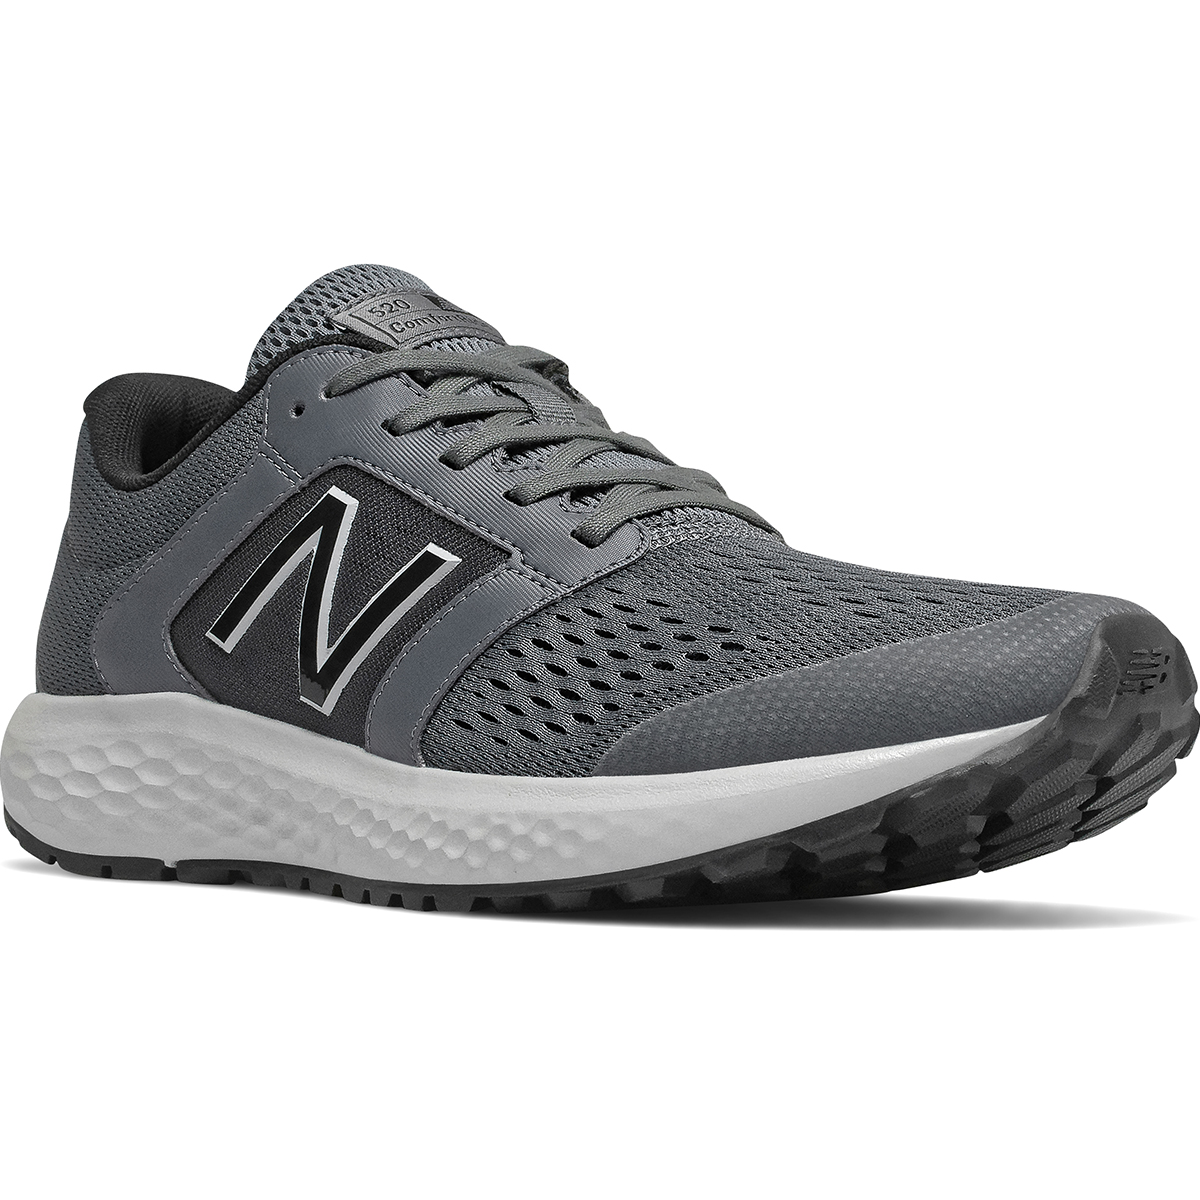 New Balance Men's 520 V5 Running Shoe, Wide - Black, 8